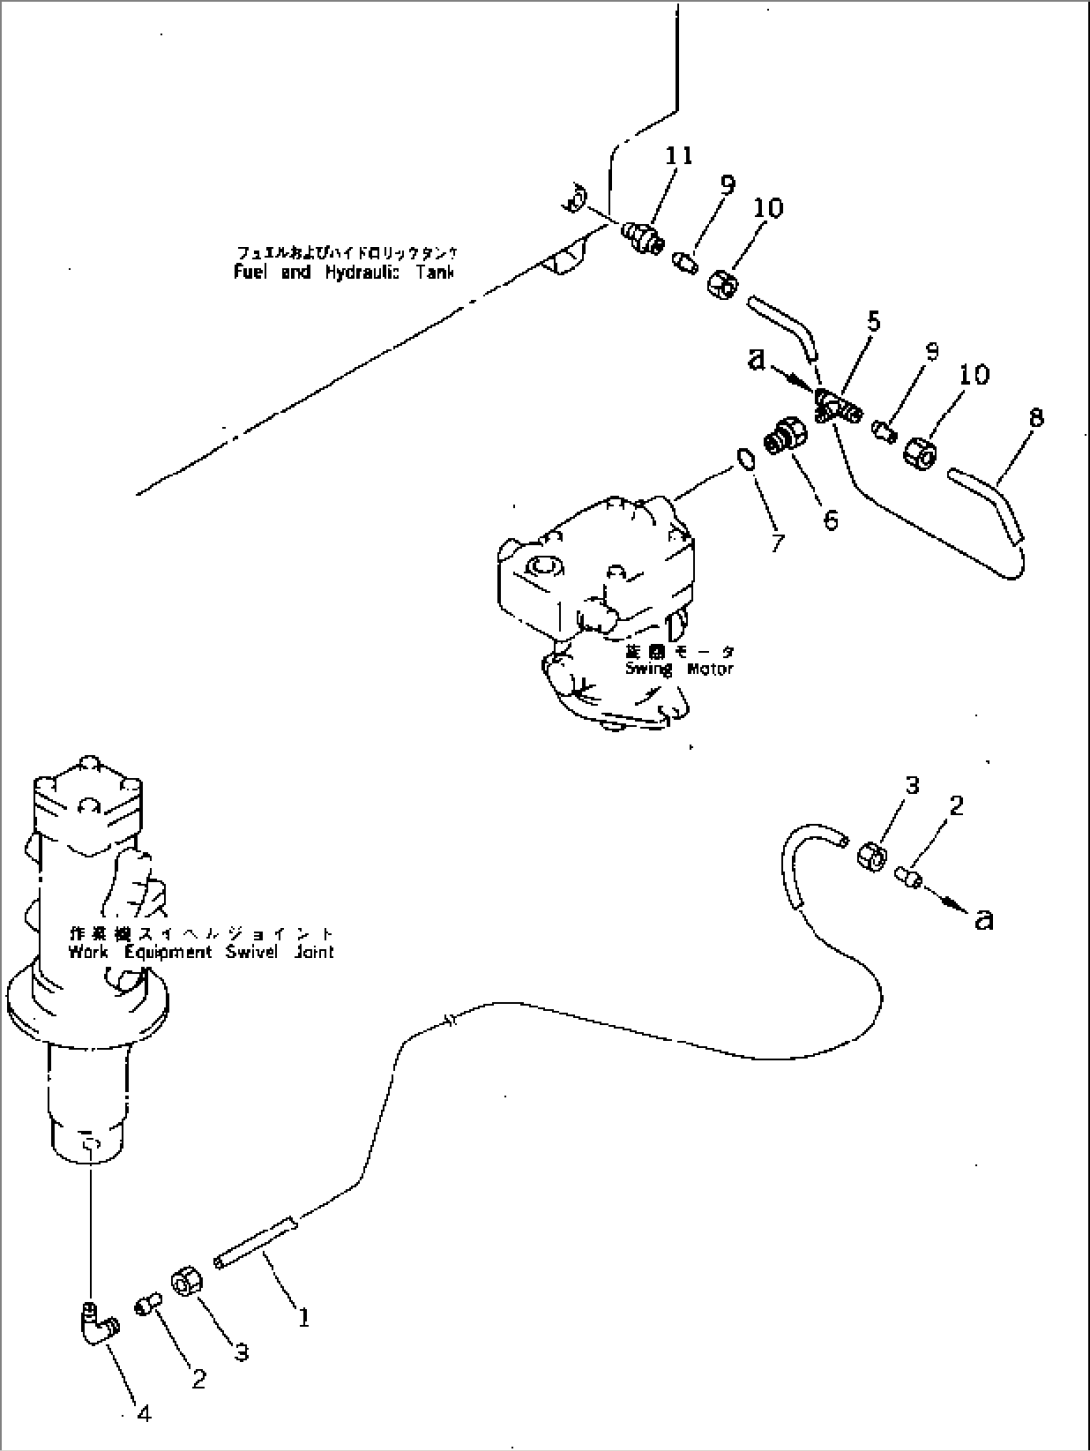 HYDRAULIC PIPING (DRAIN LINE) (2/2)